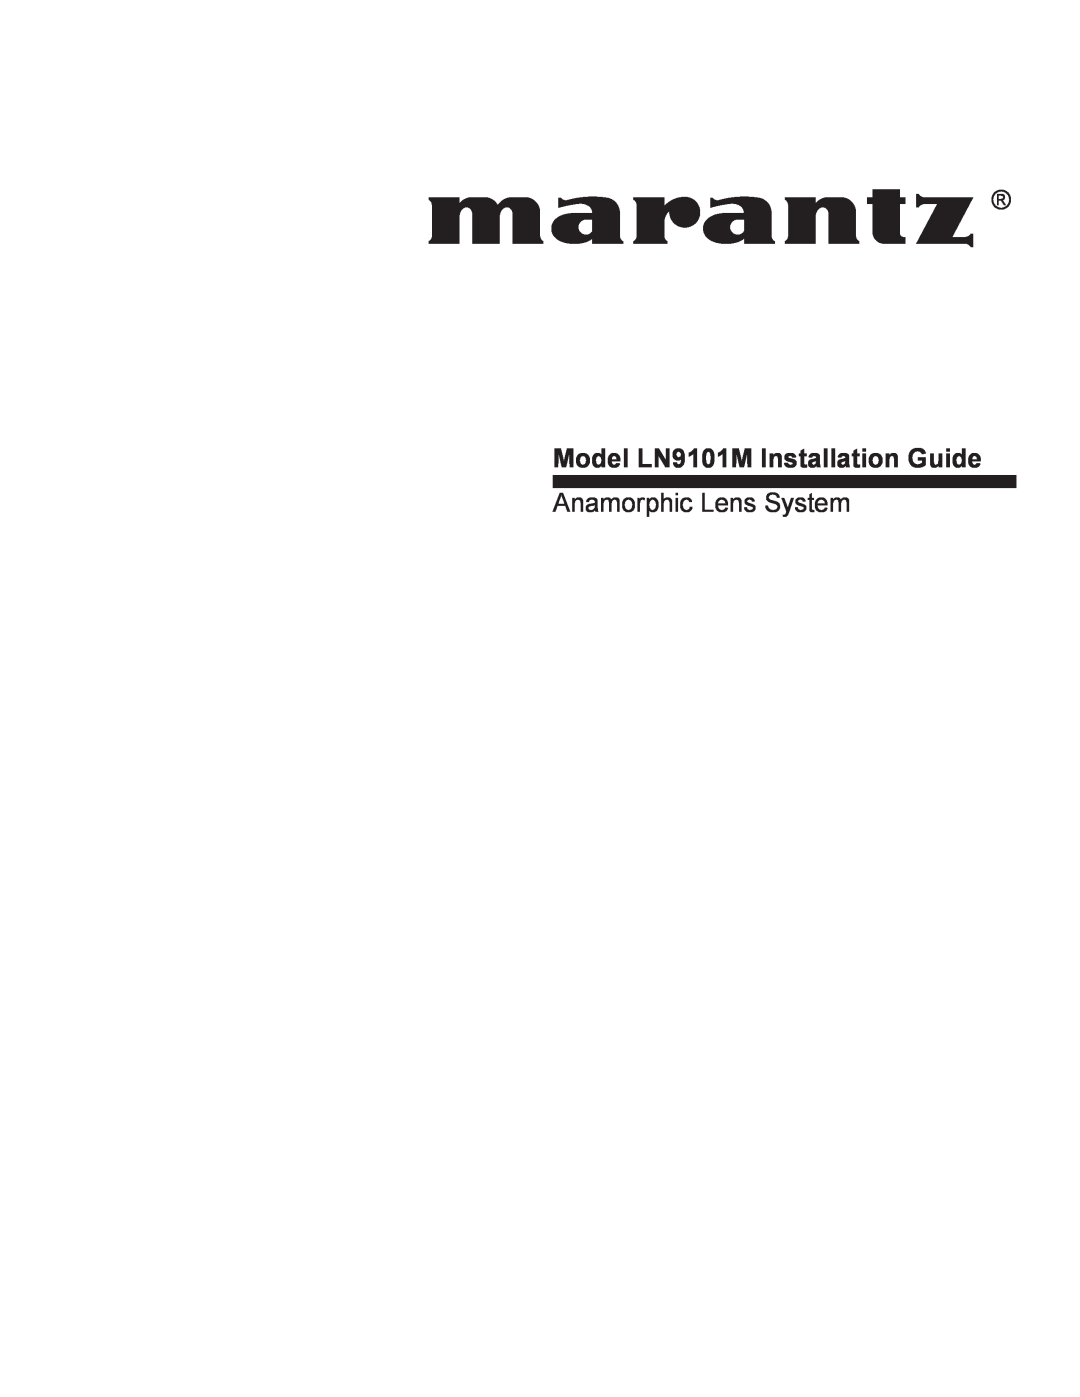 Marantz manual Model LN9101M Installation Guide, Anamorphic Lens System 